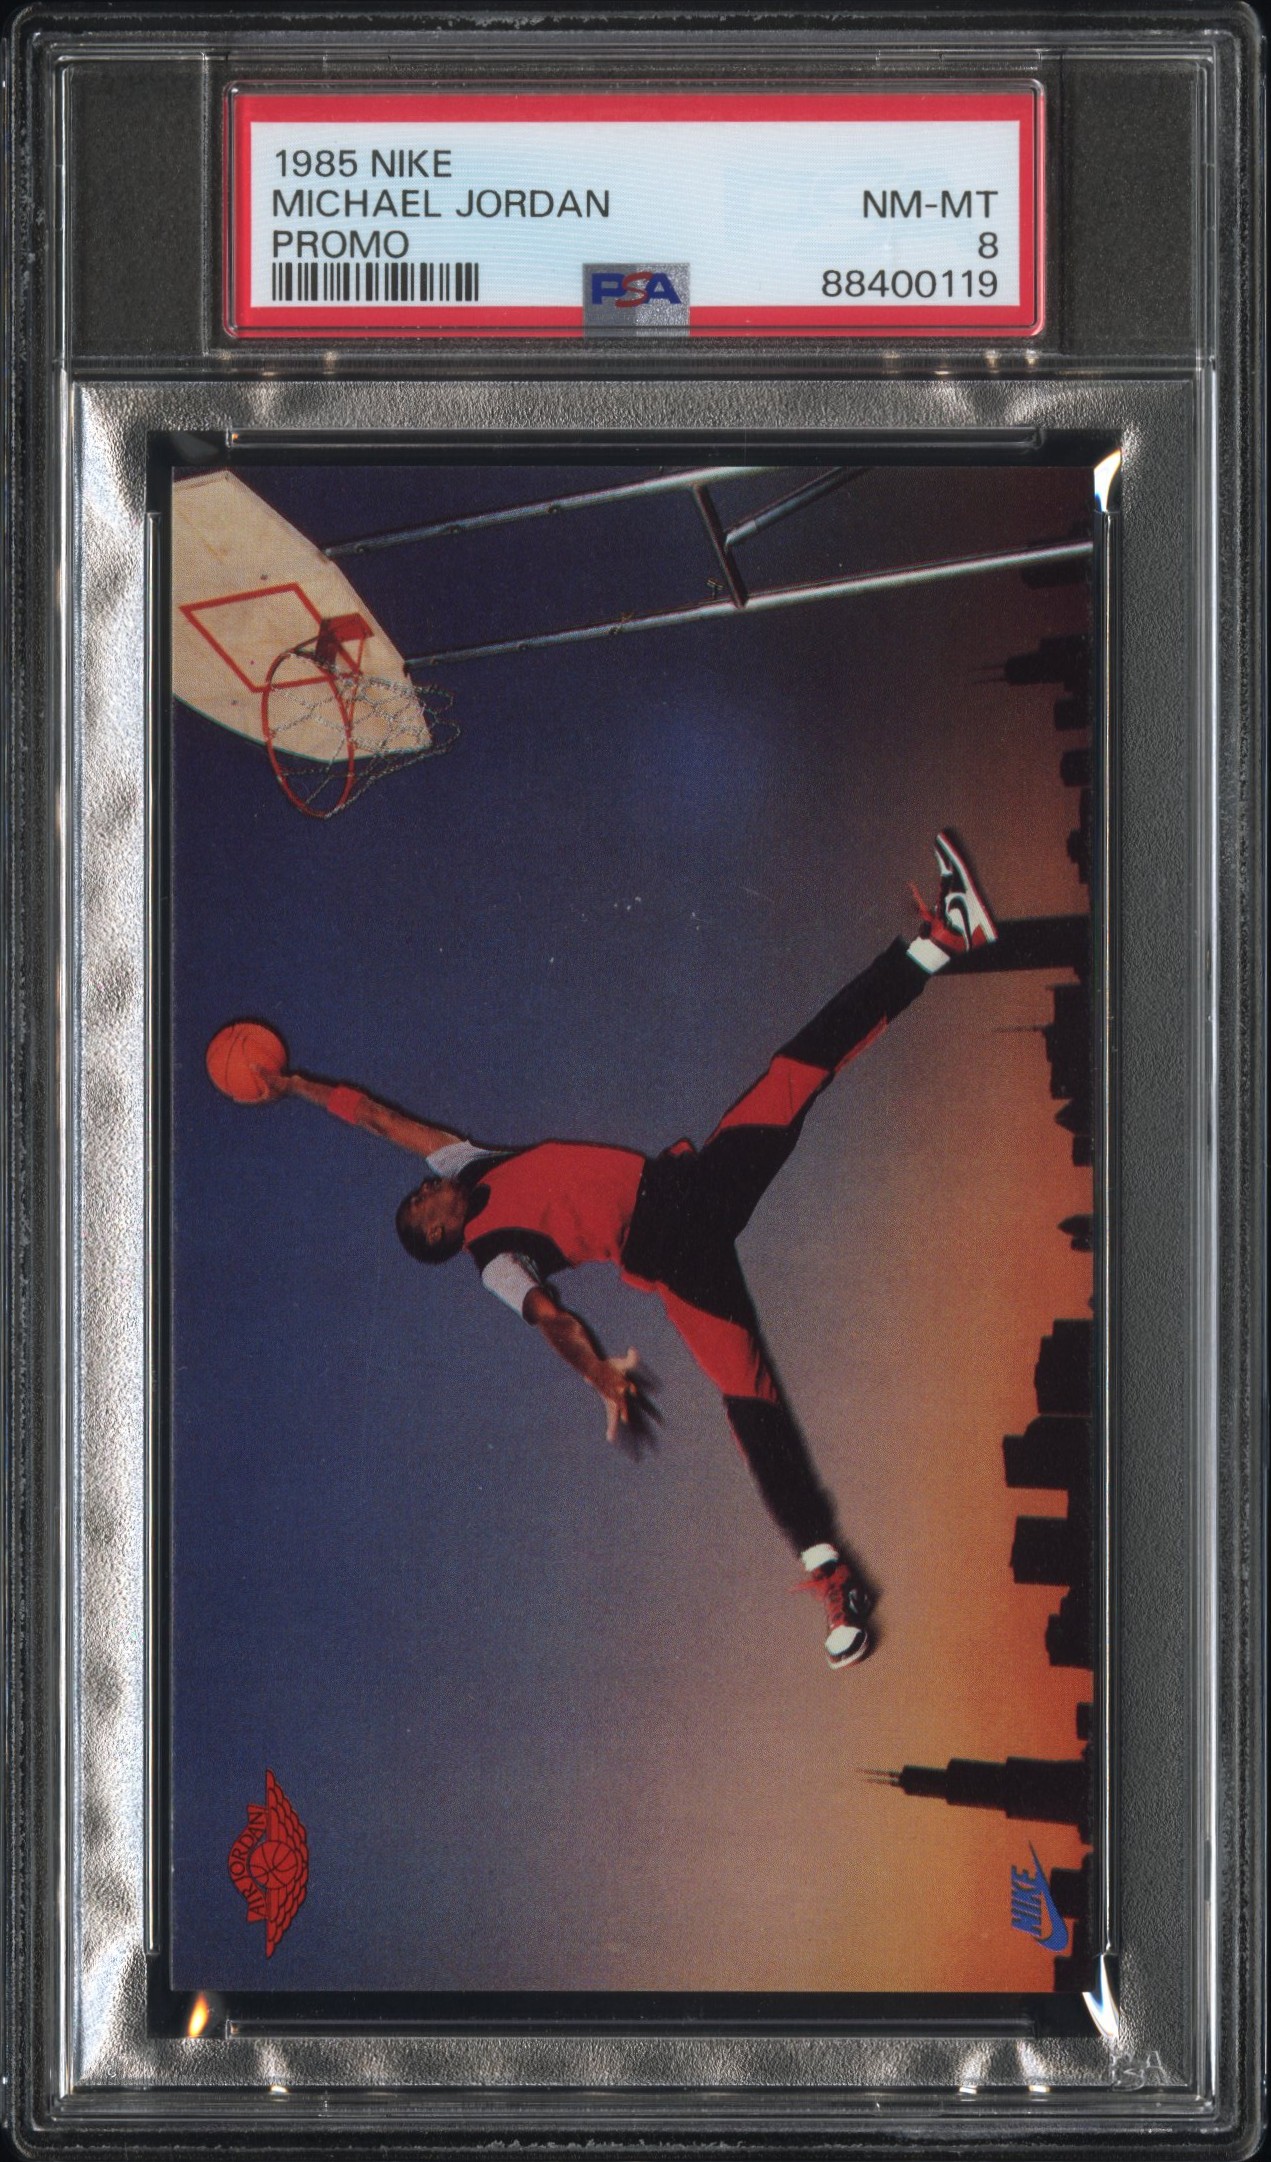 1985 Nike Promo Michael Jordan Rookie Card – PSA NM-MT 8